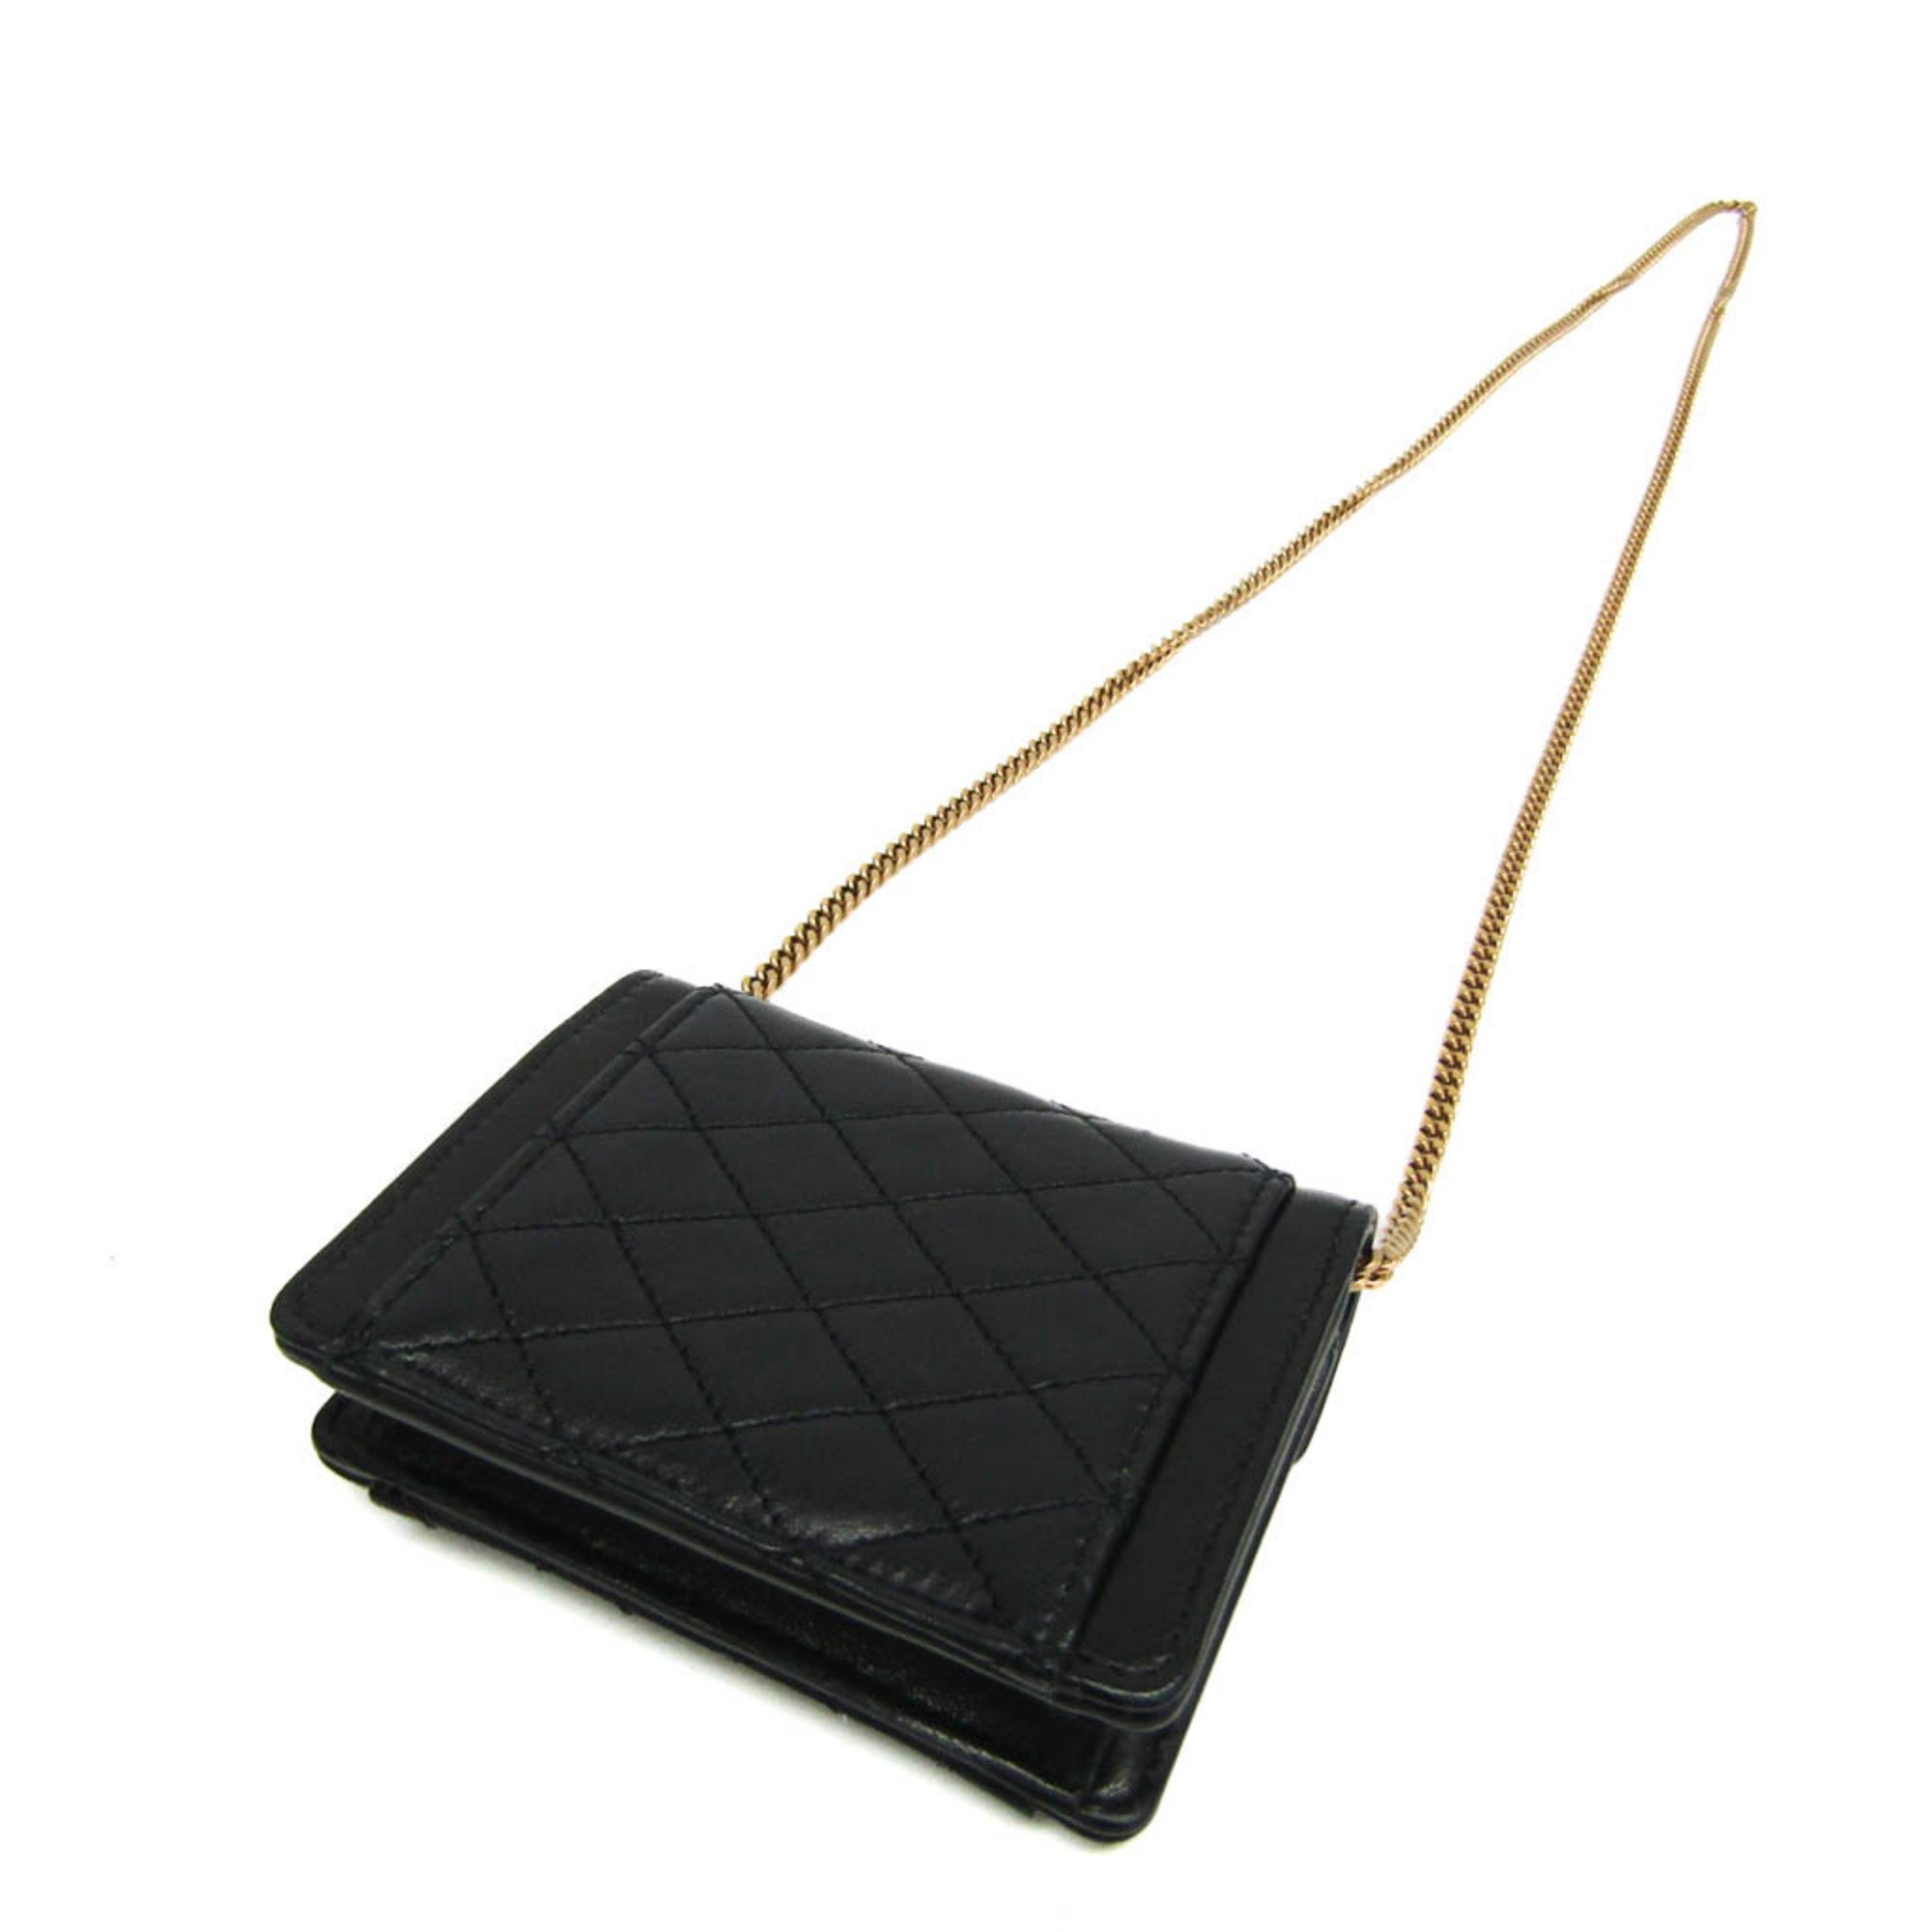 Saint Laurent Gaby Micro Bag 6856121EL071000 Women's Leather Shoulder Bag Black